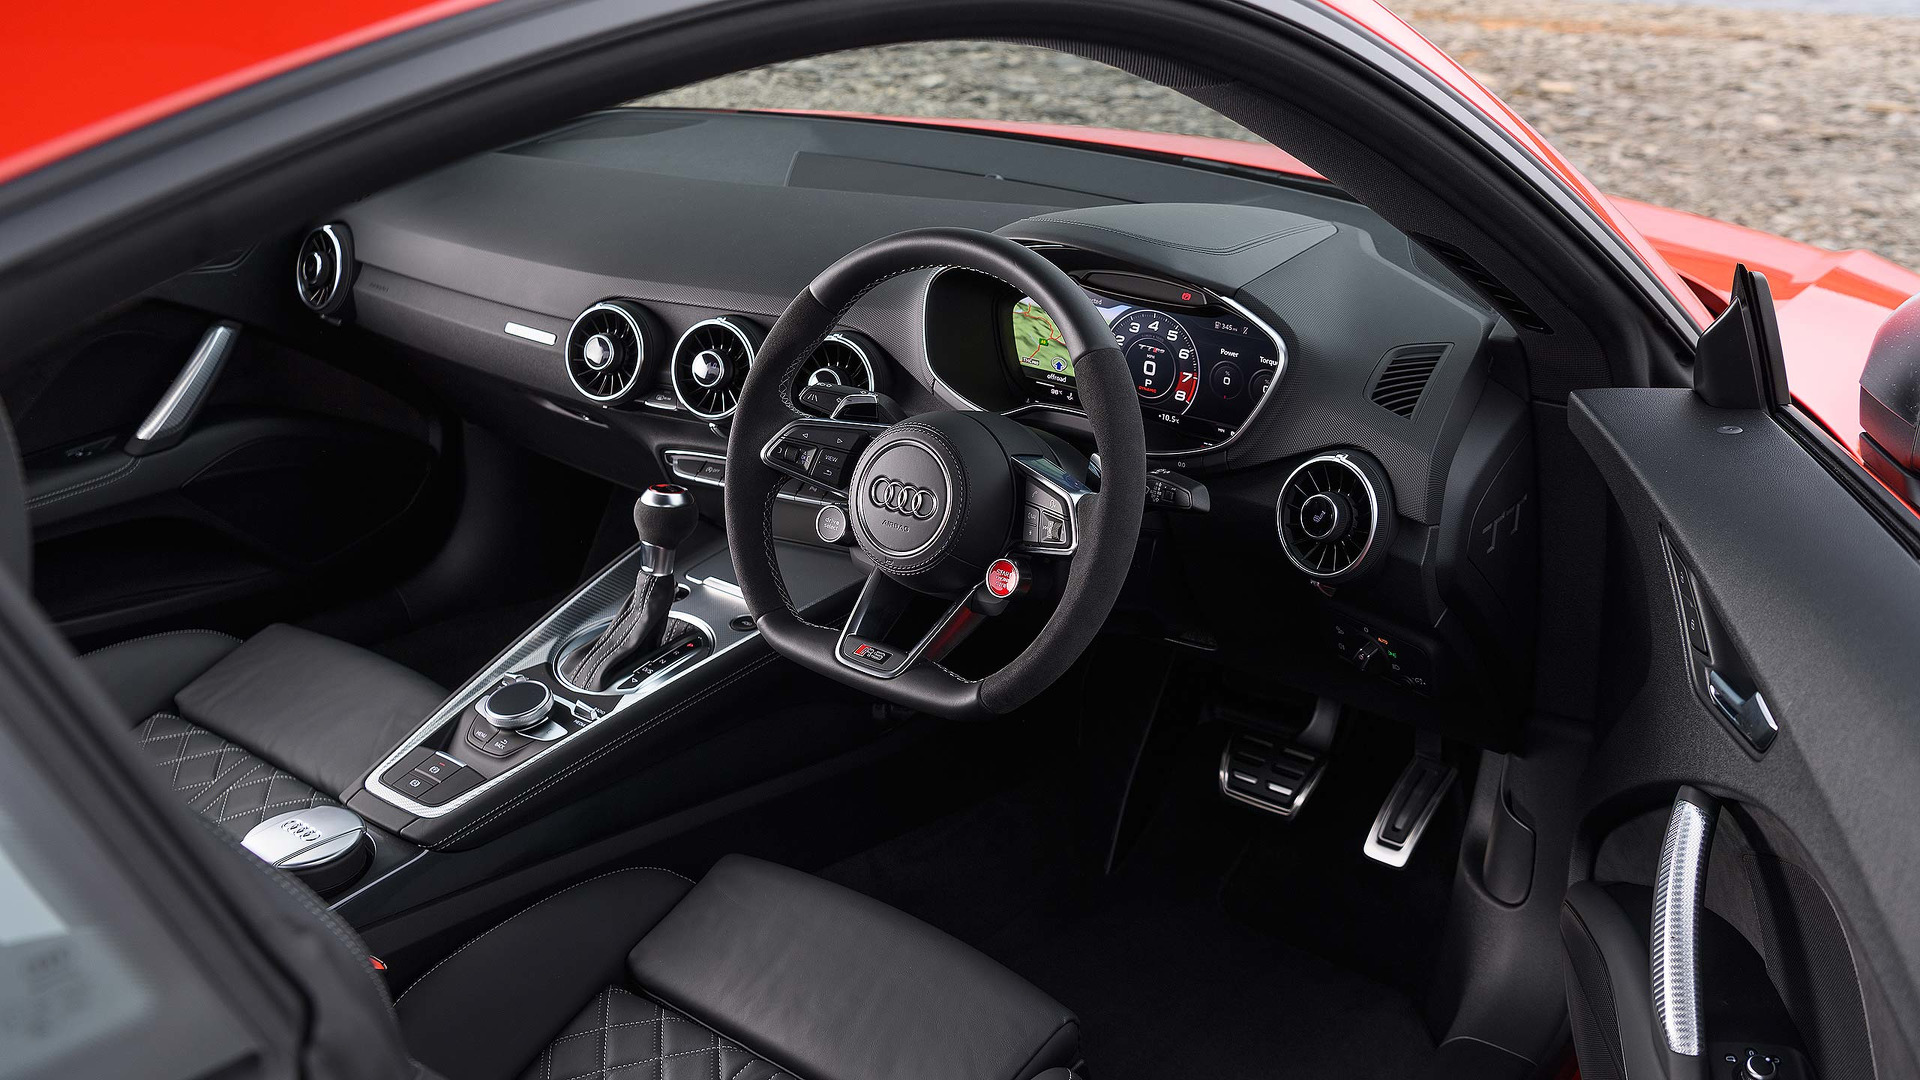 2017 Audi TT Coupe Review